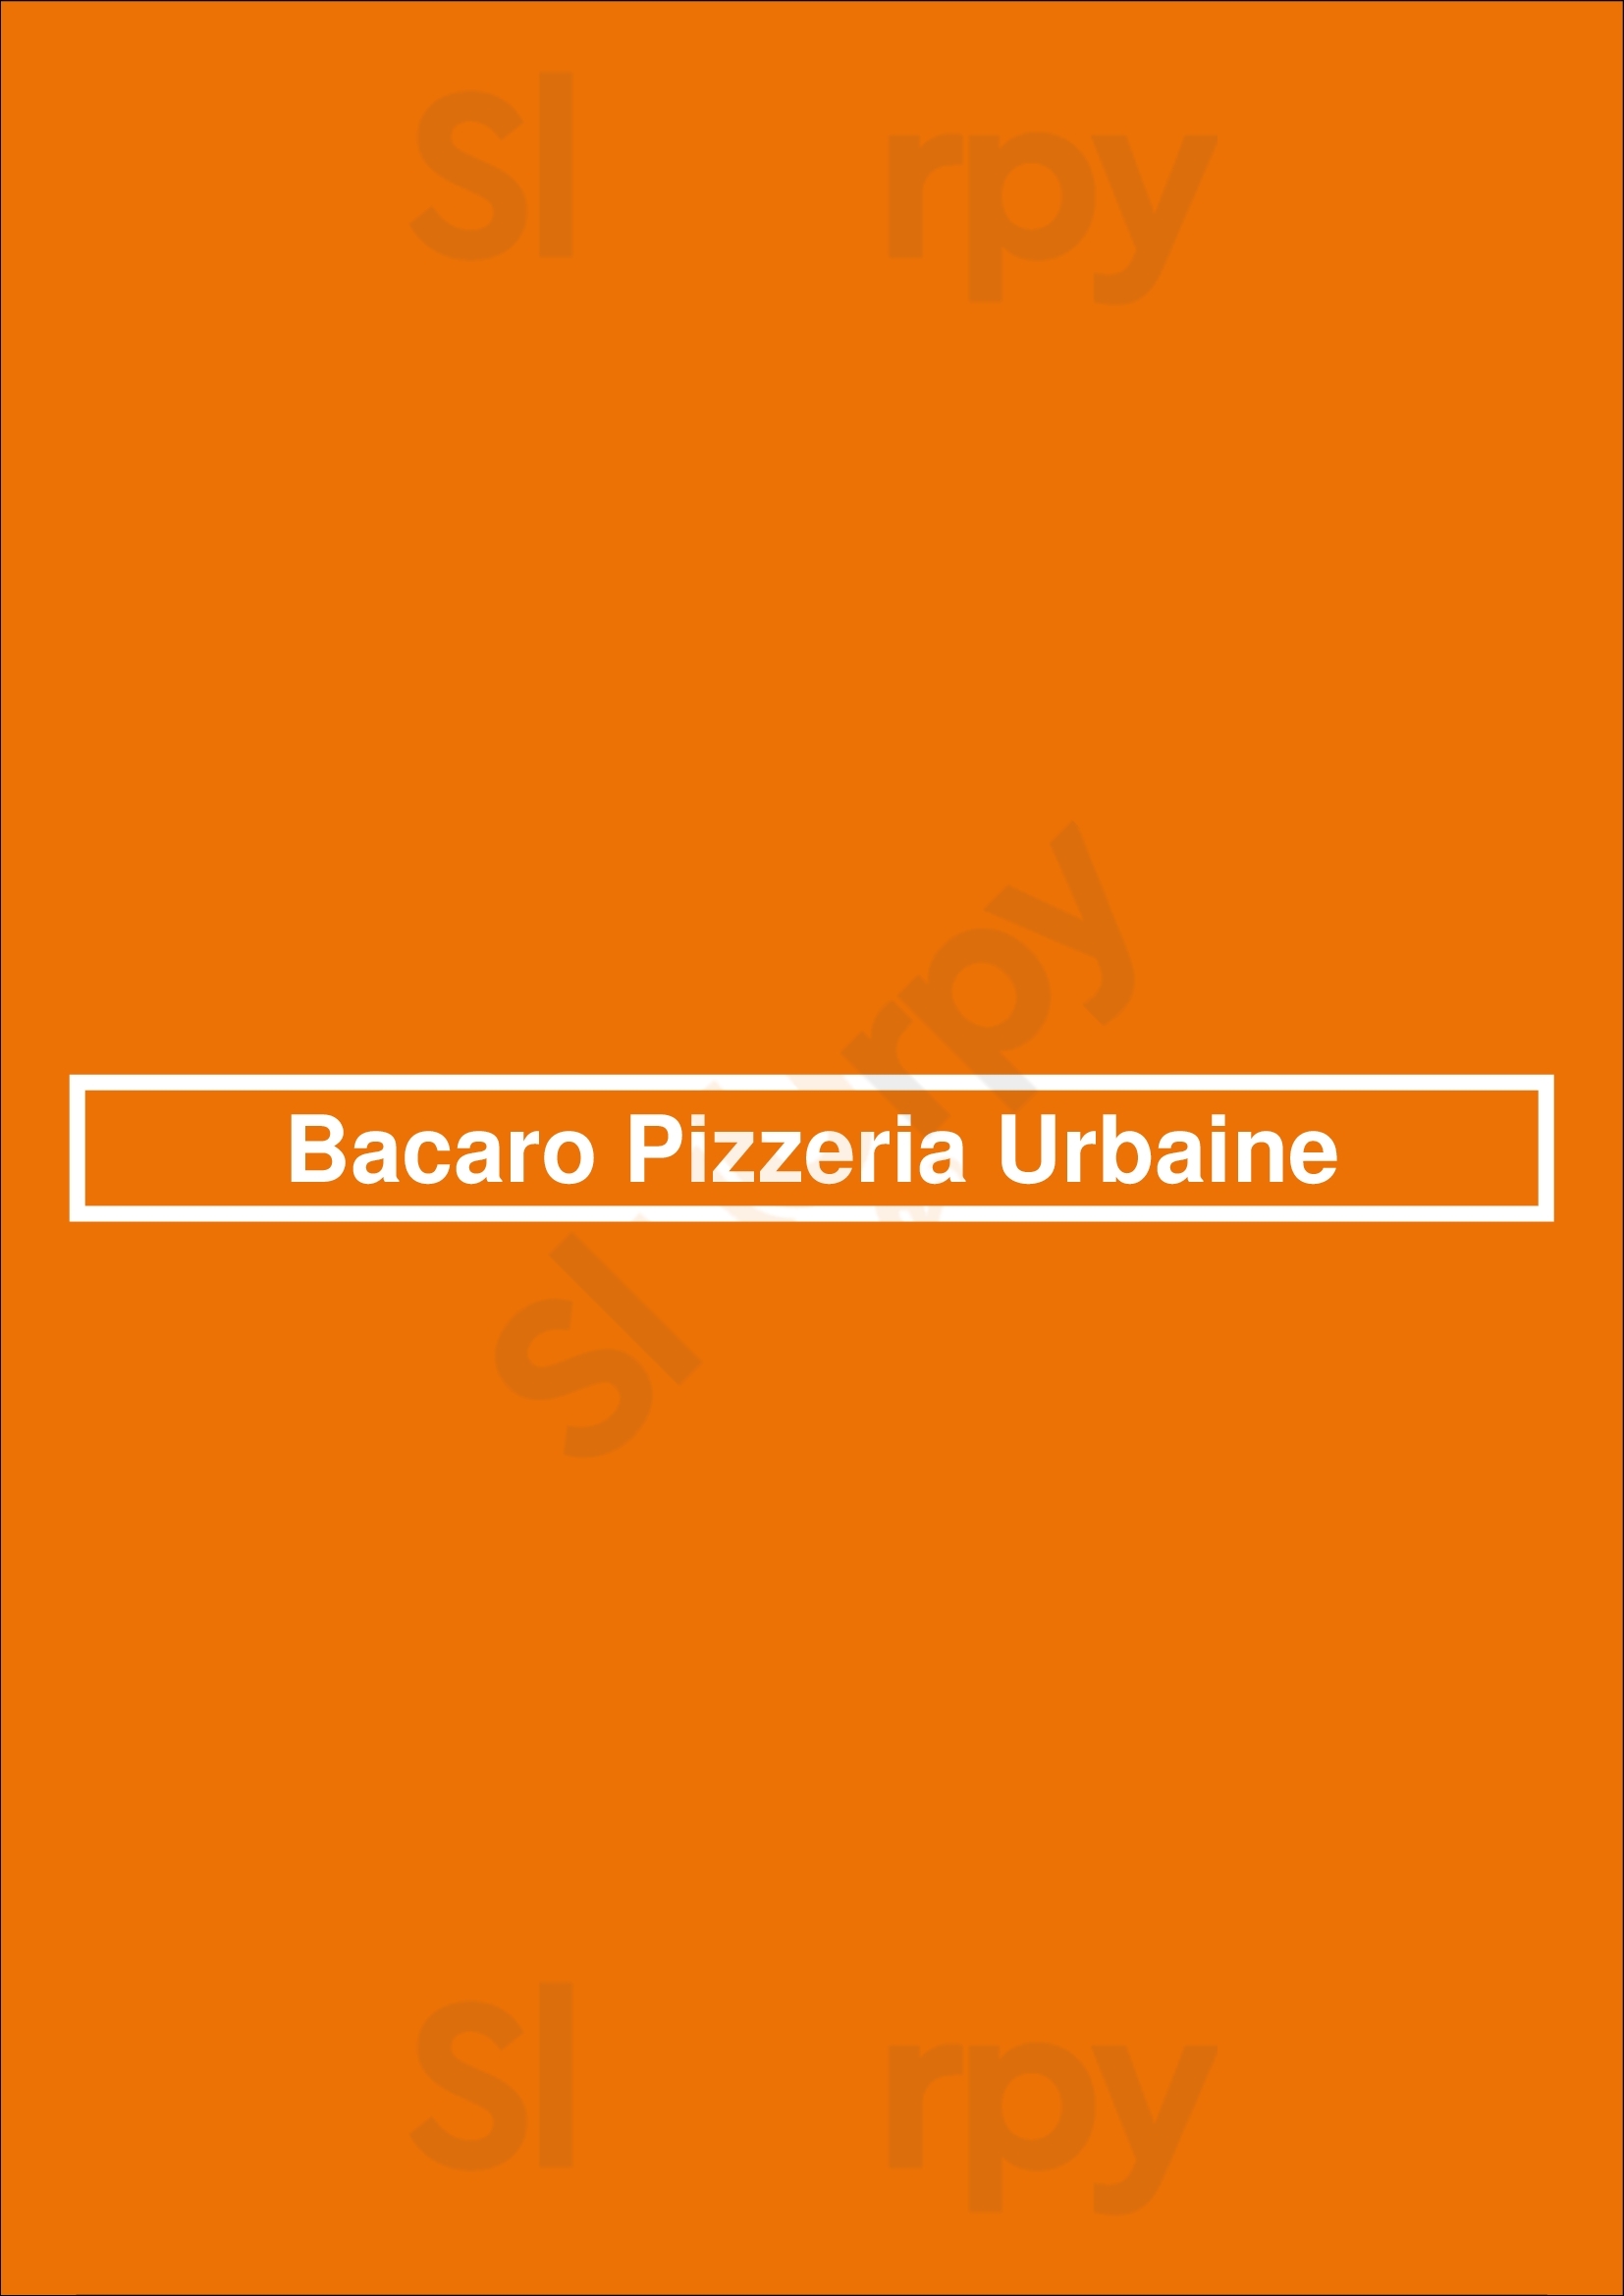 Bacaro Pizzeria Urbaine Westmount Menu - 1